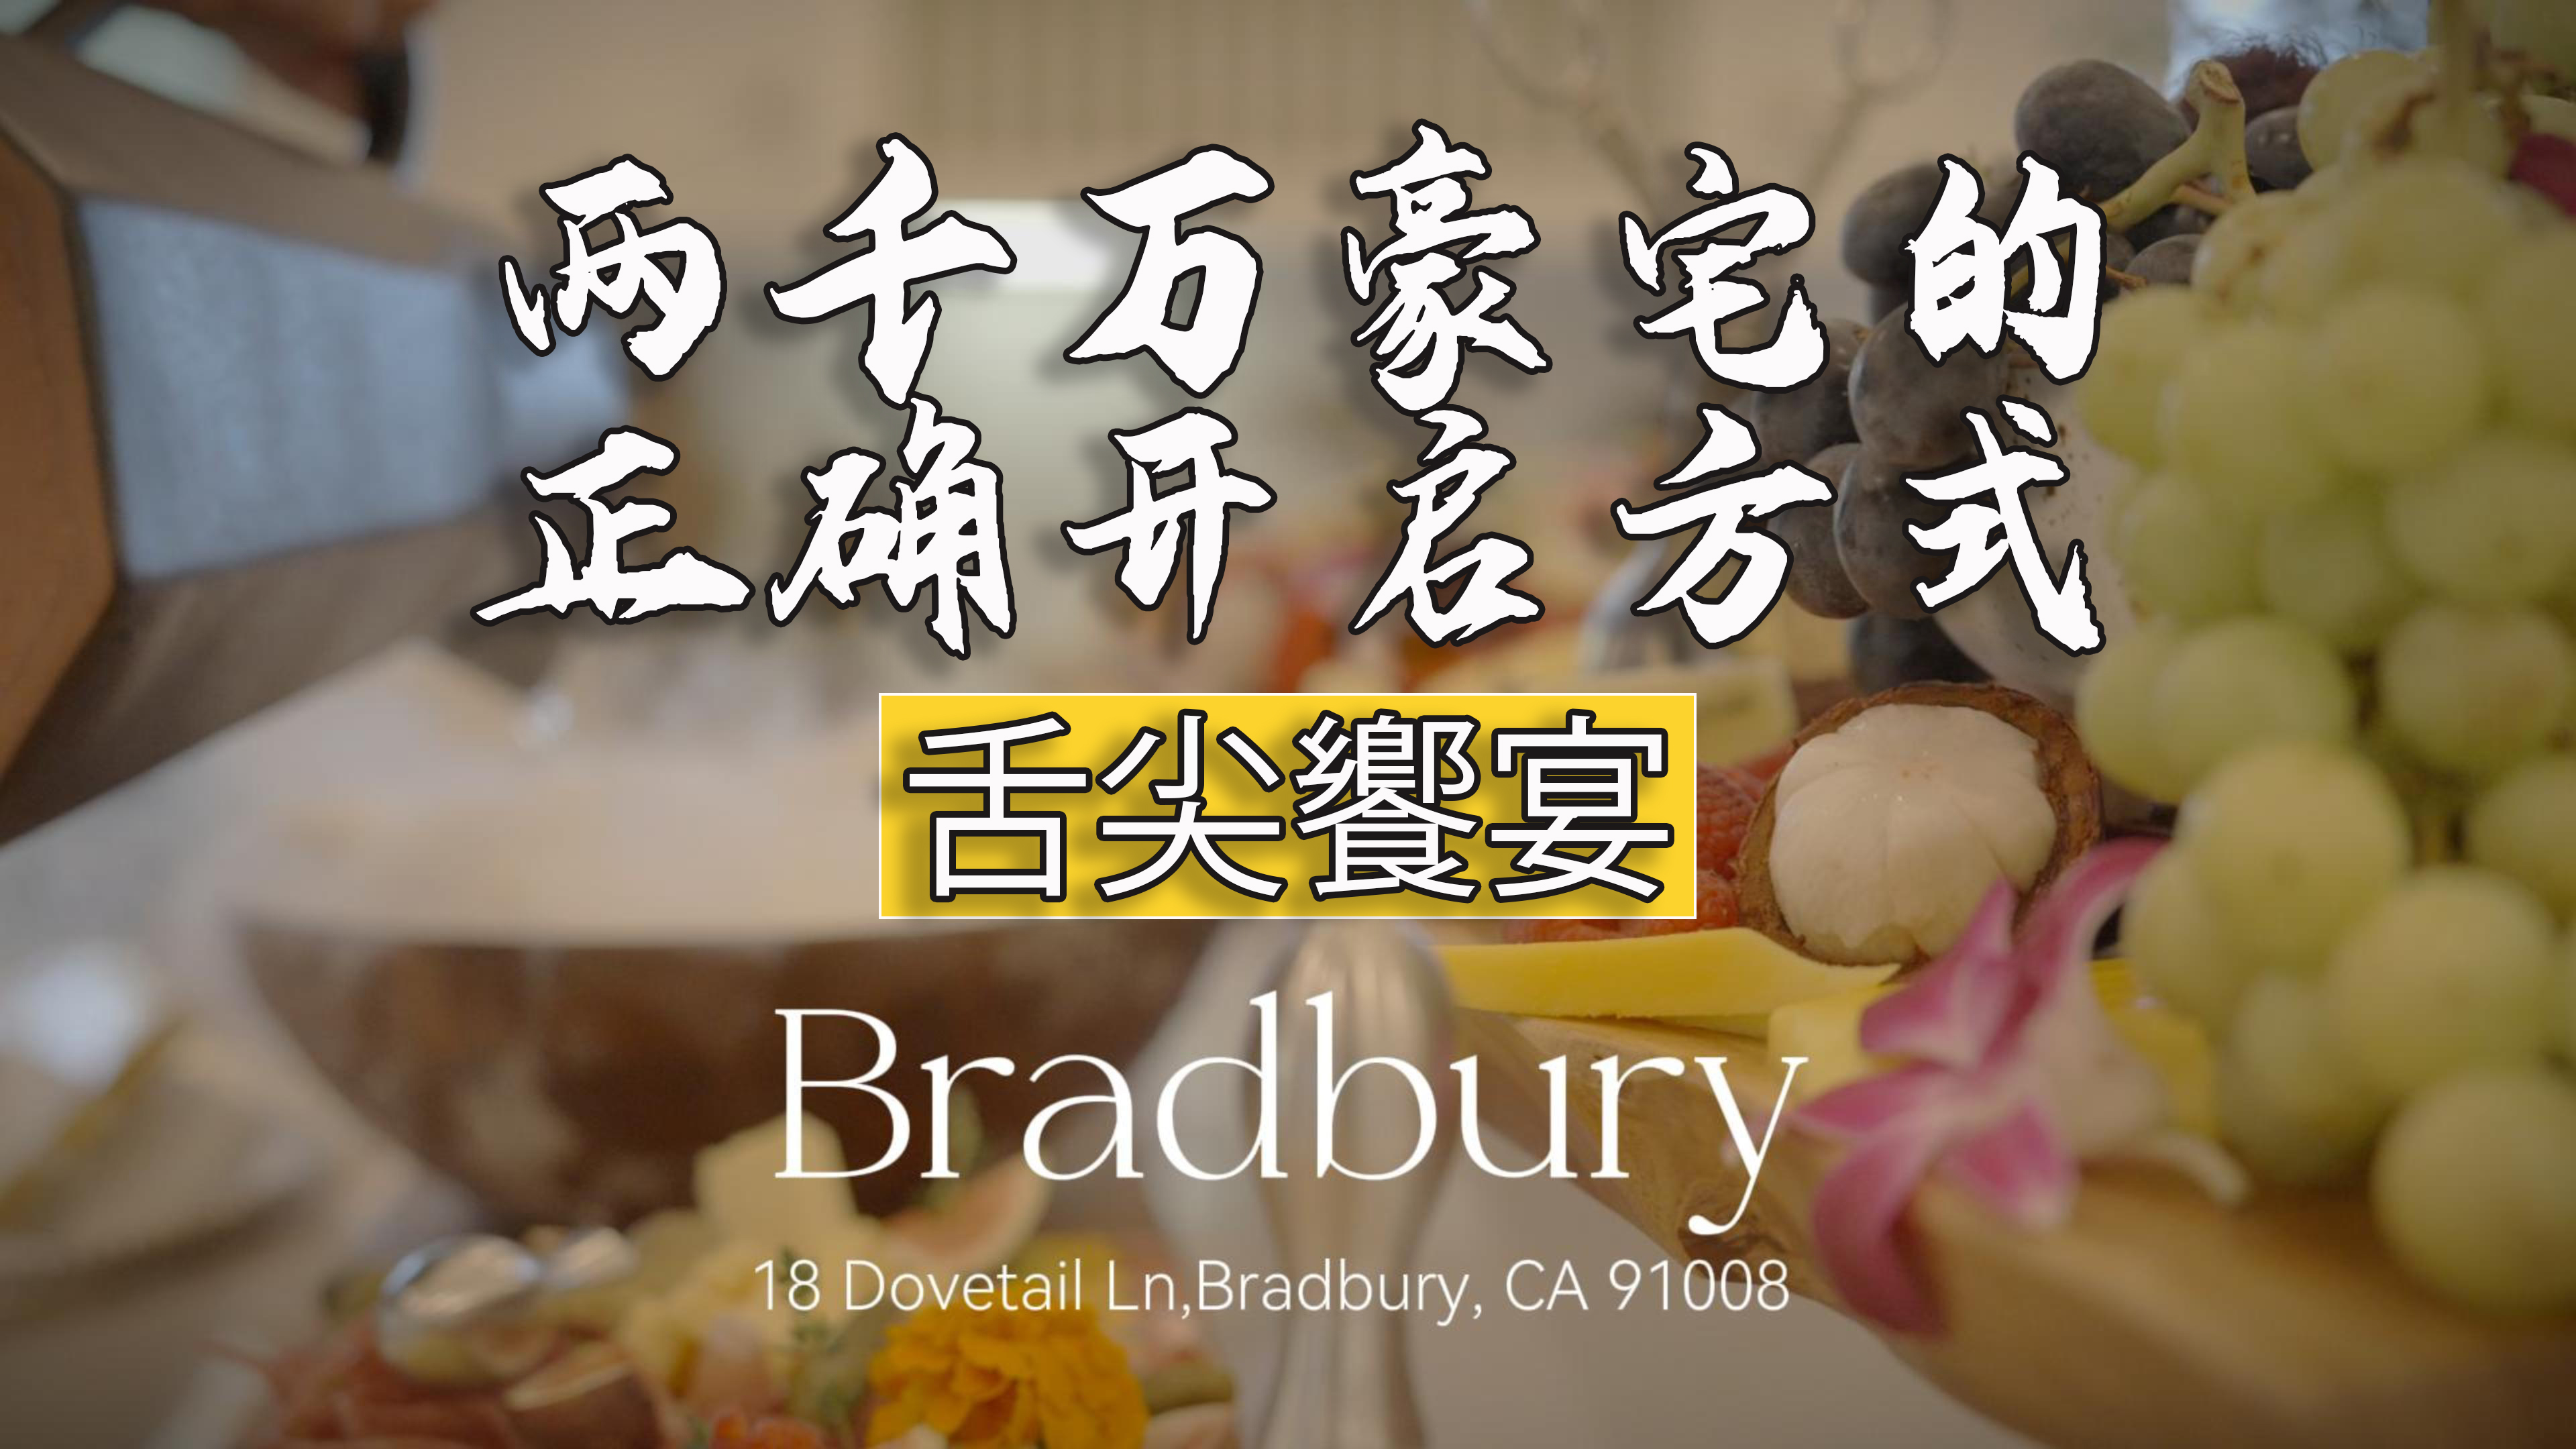 Bradbury 超级豪宅宴请宾客的正确打开方式, 你 get 到了吗?